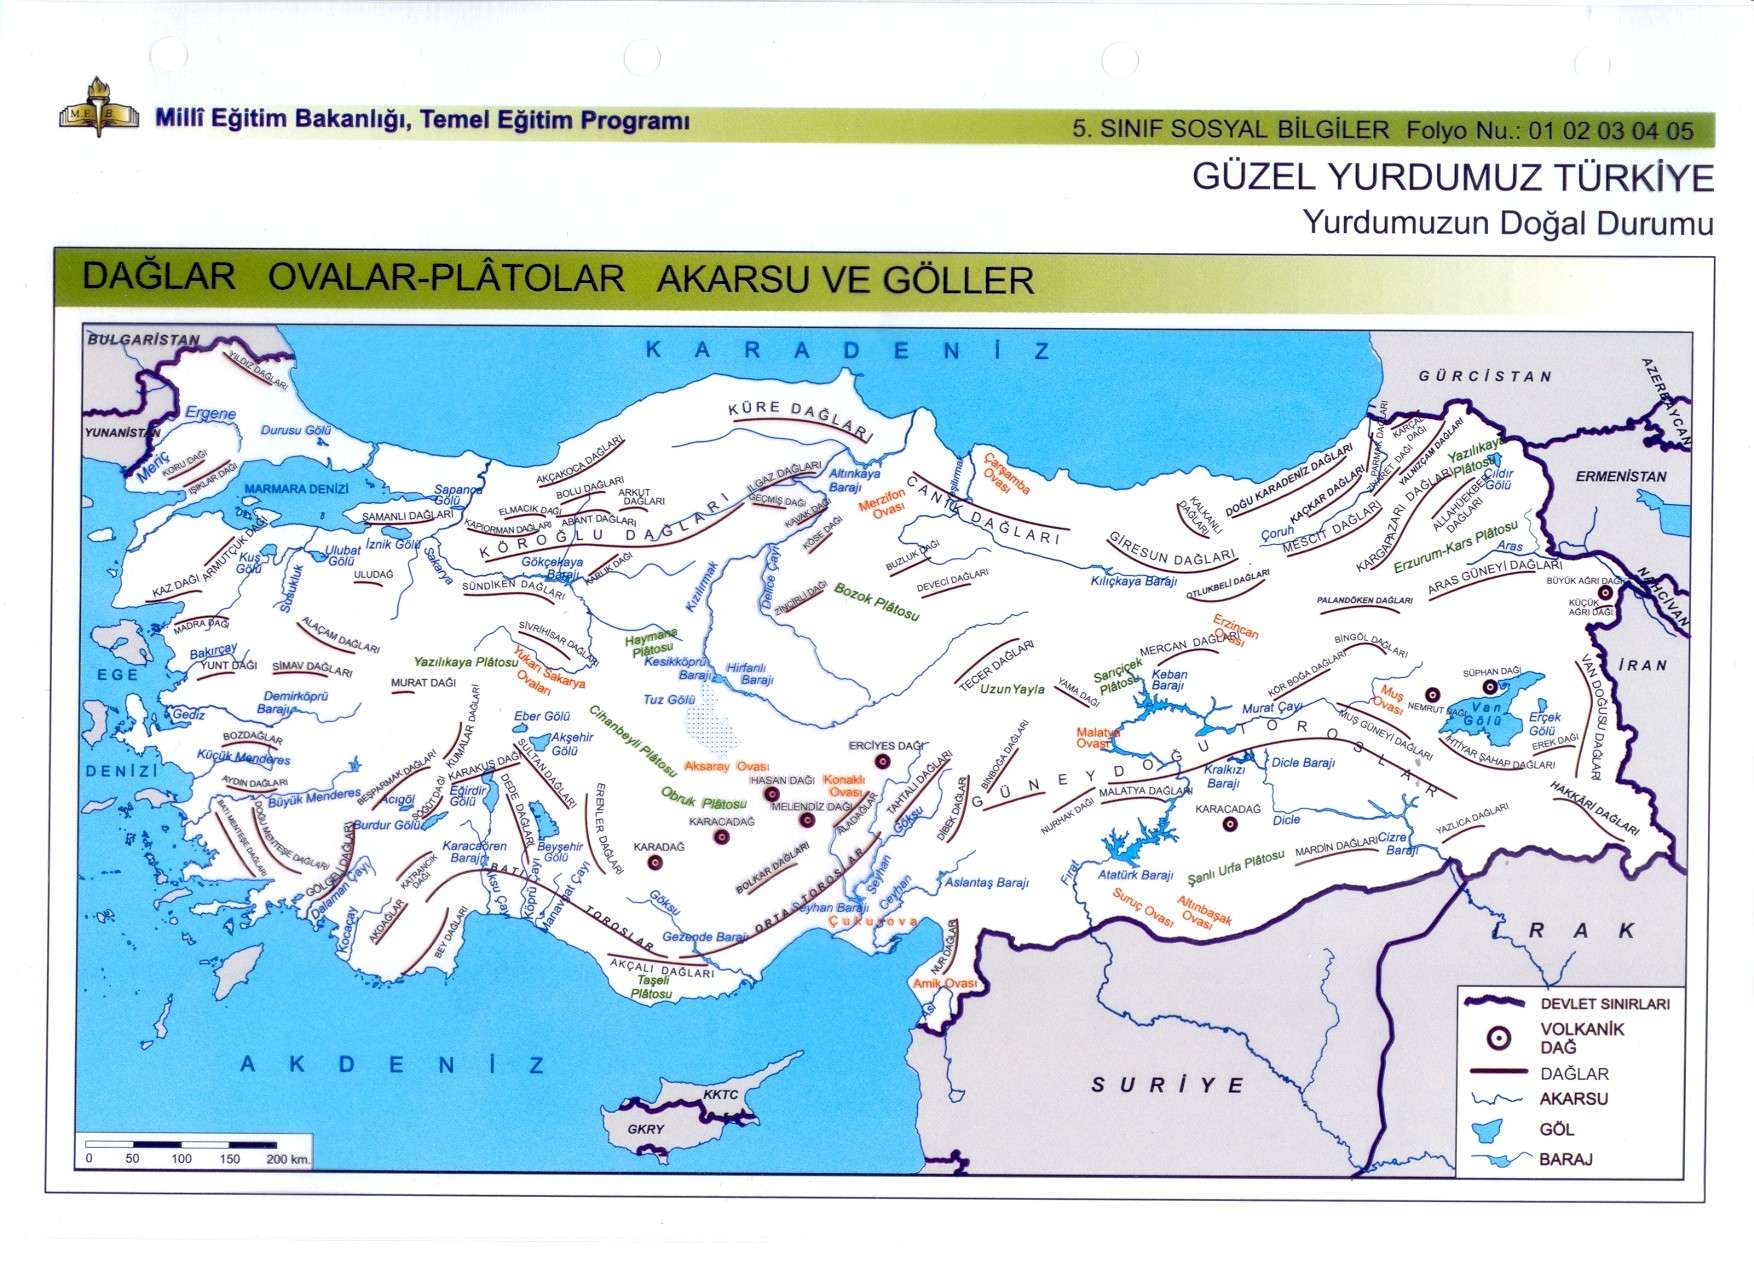 Trkiye Dalar - Ovalar - Platolar - Akarsu ve Gller Haritas Slide010